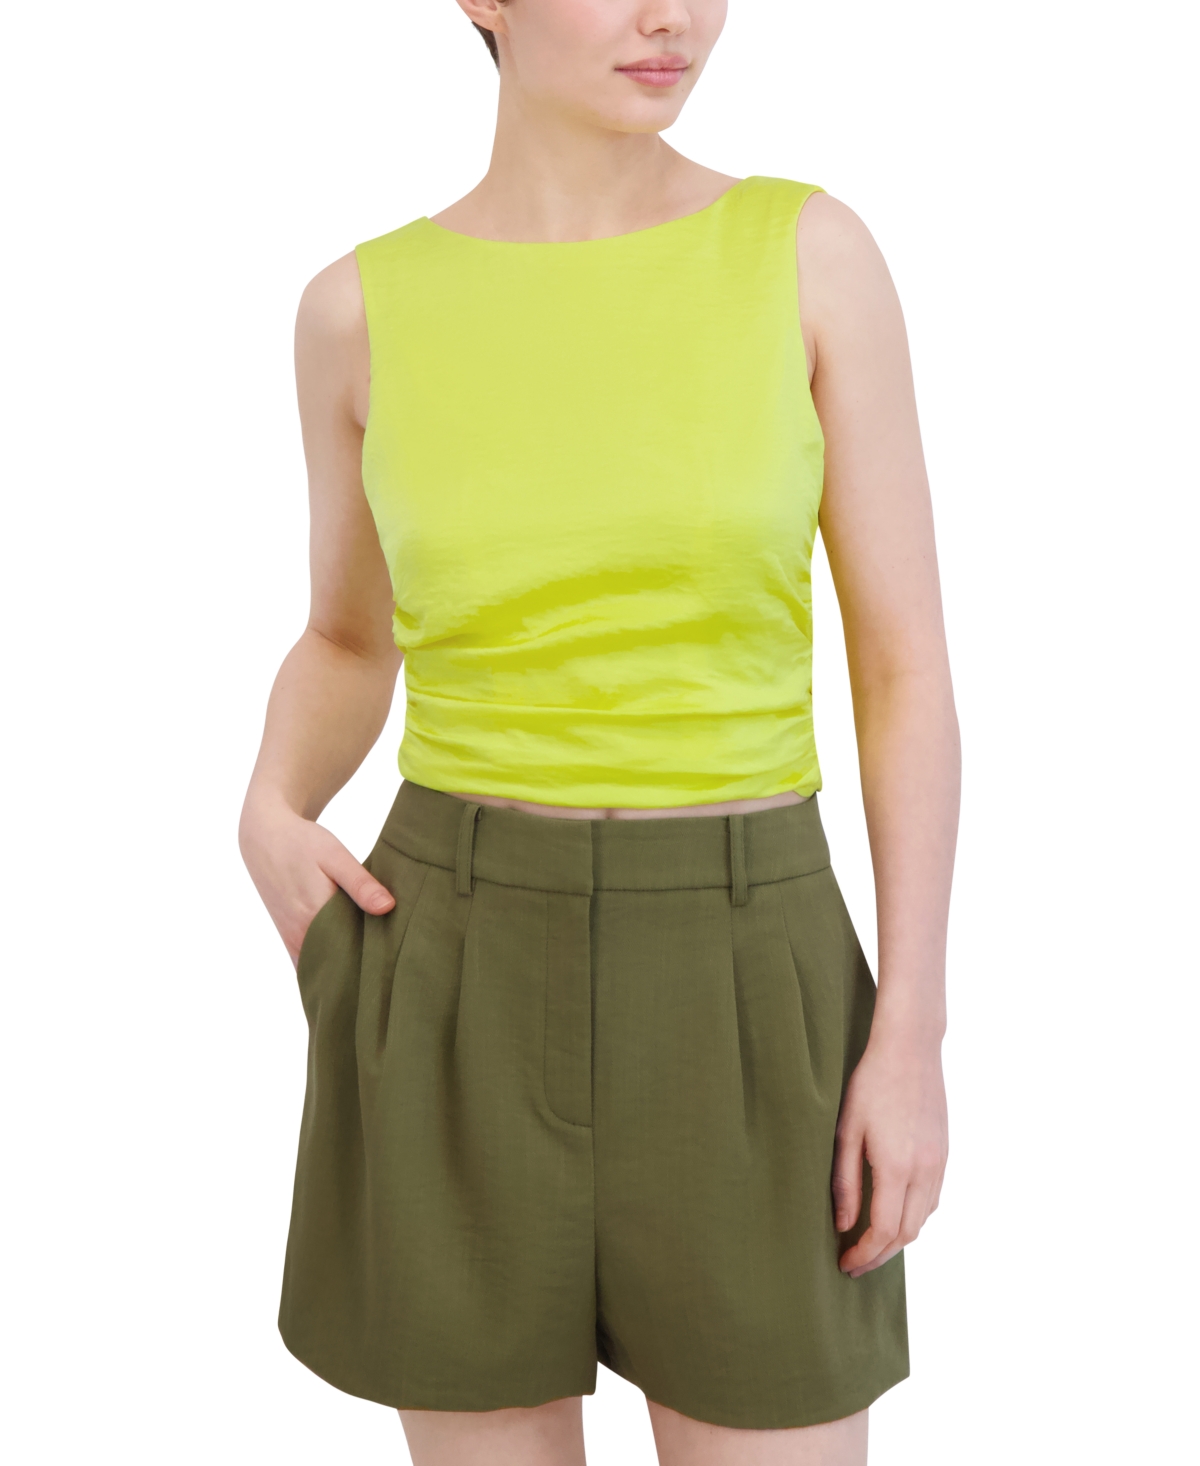 Women's Wrap-Back Sleeveless Top - Yellow